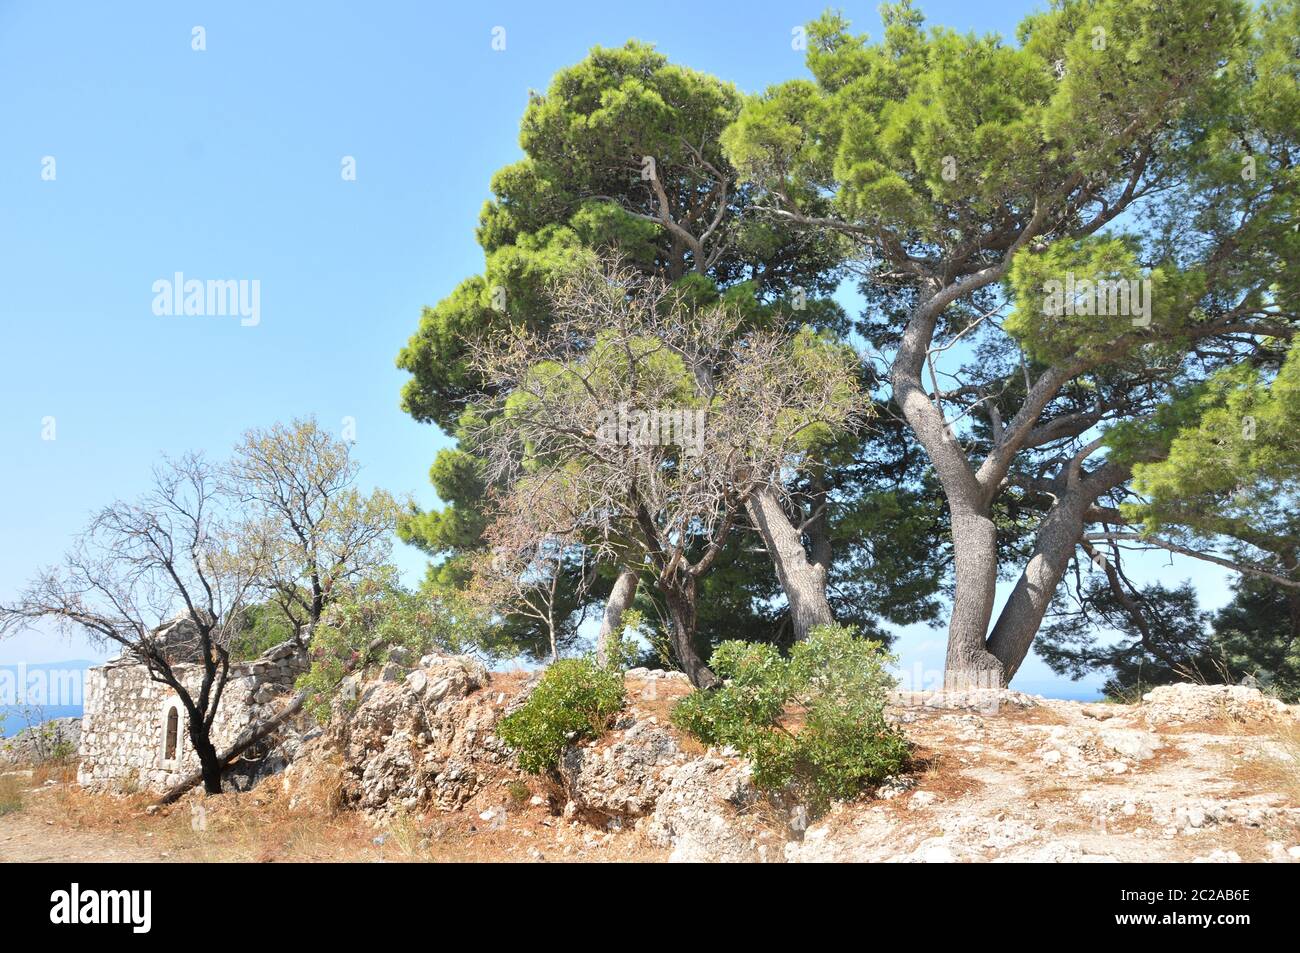 Group of trees on rocks at the coast of Igrane in Croatia Stock Photo